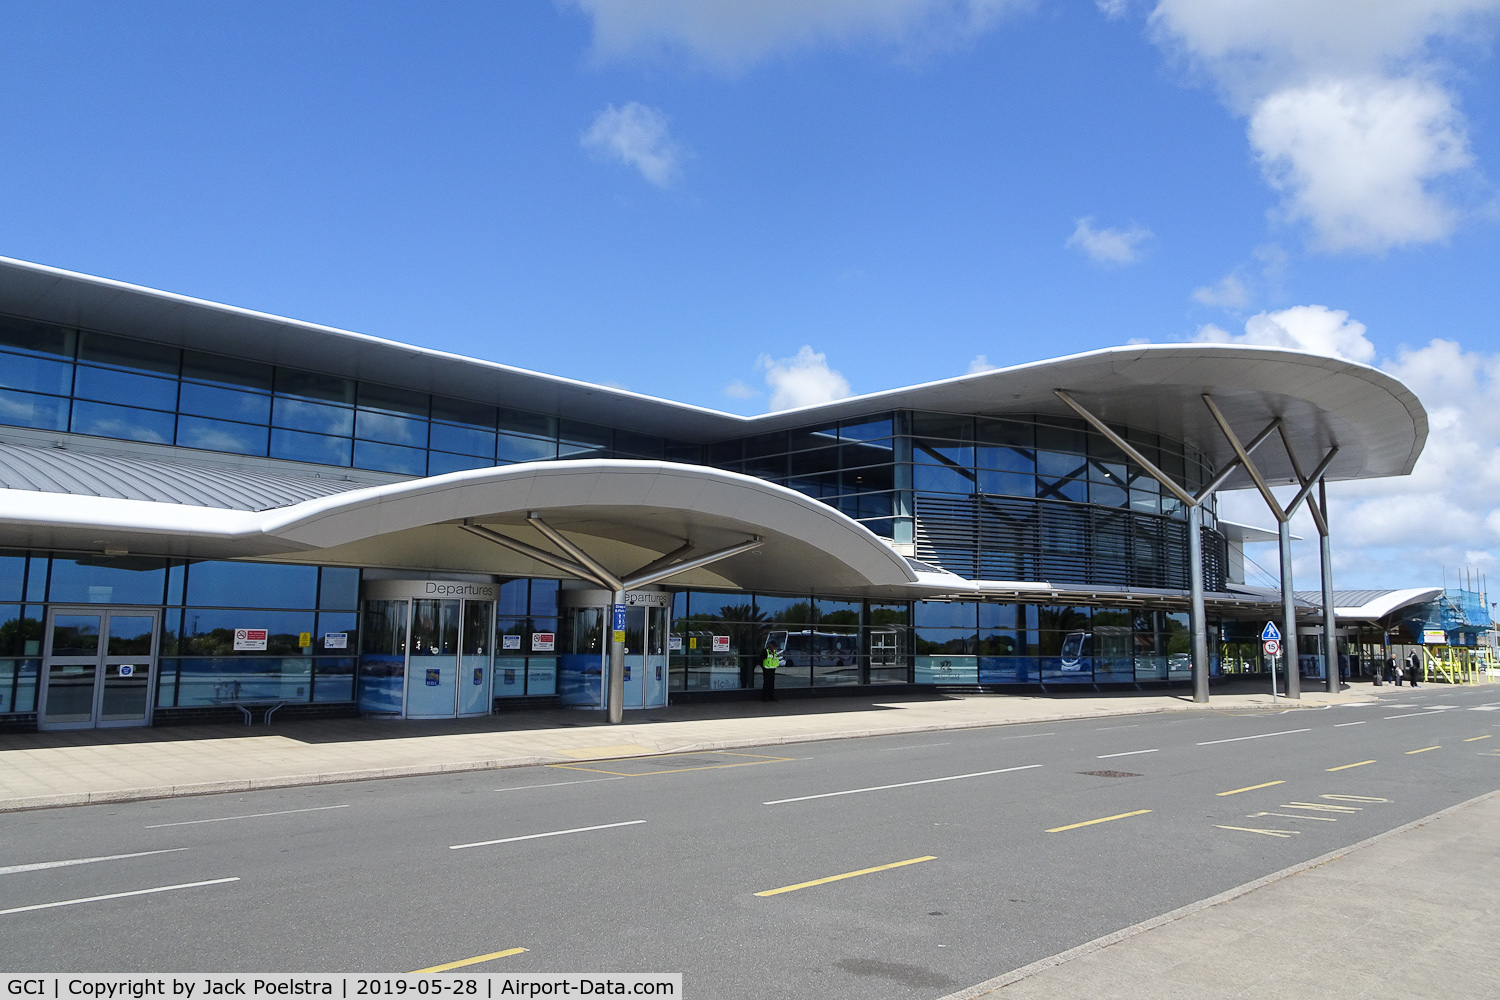 Guernsey Airport, Guernsey, Channel Islands United Kingdom (GCI) - Passenger terminal of Guernsey airport